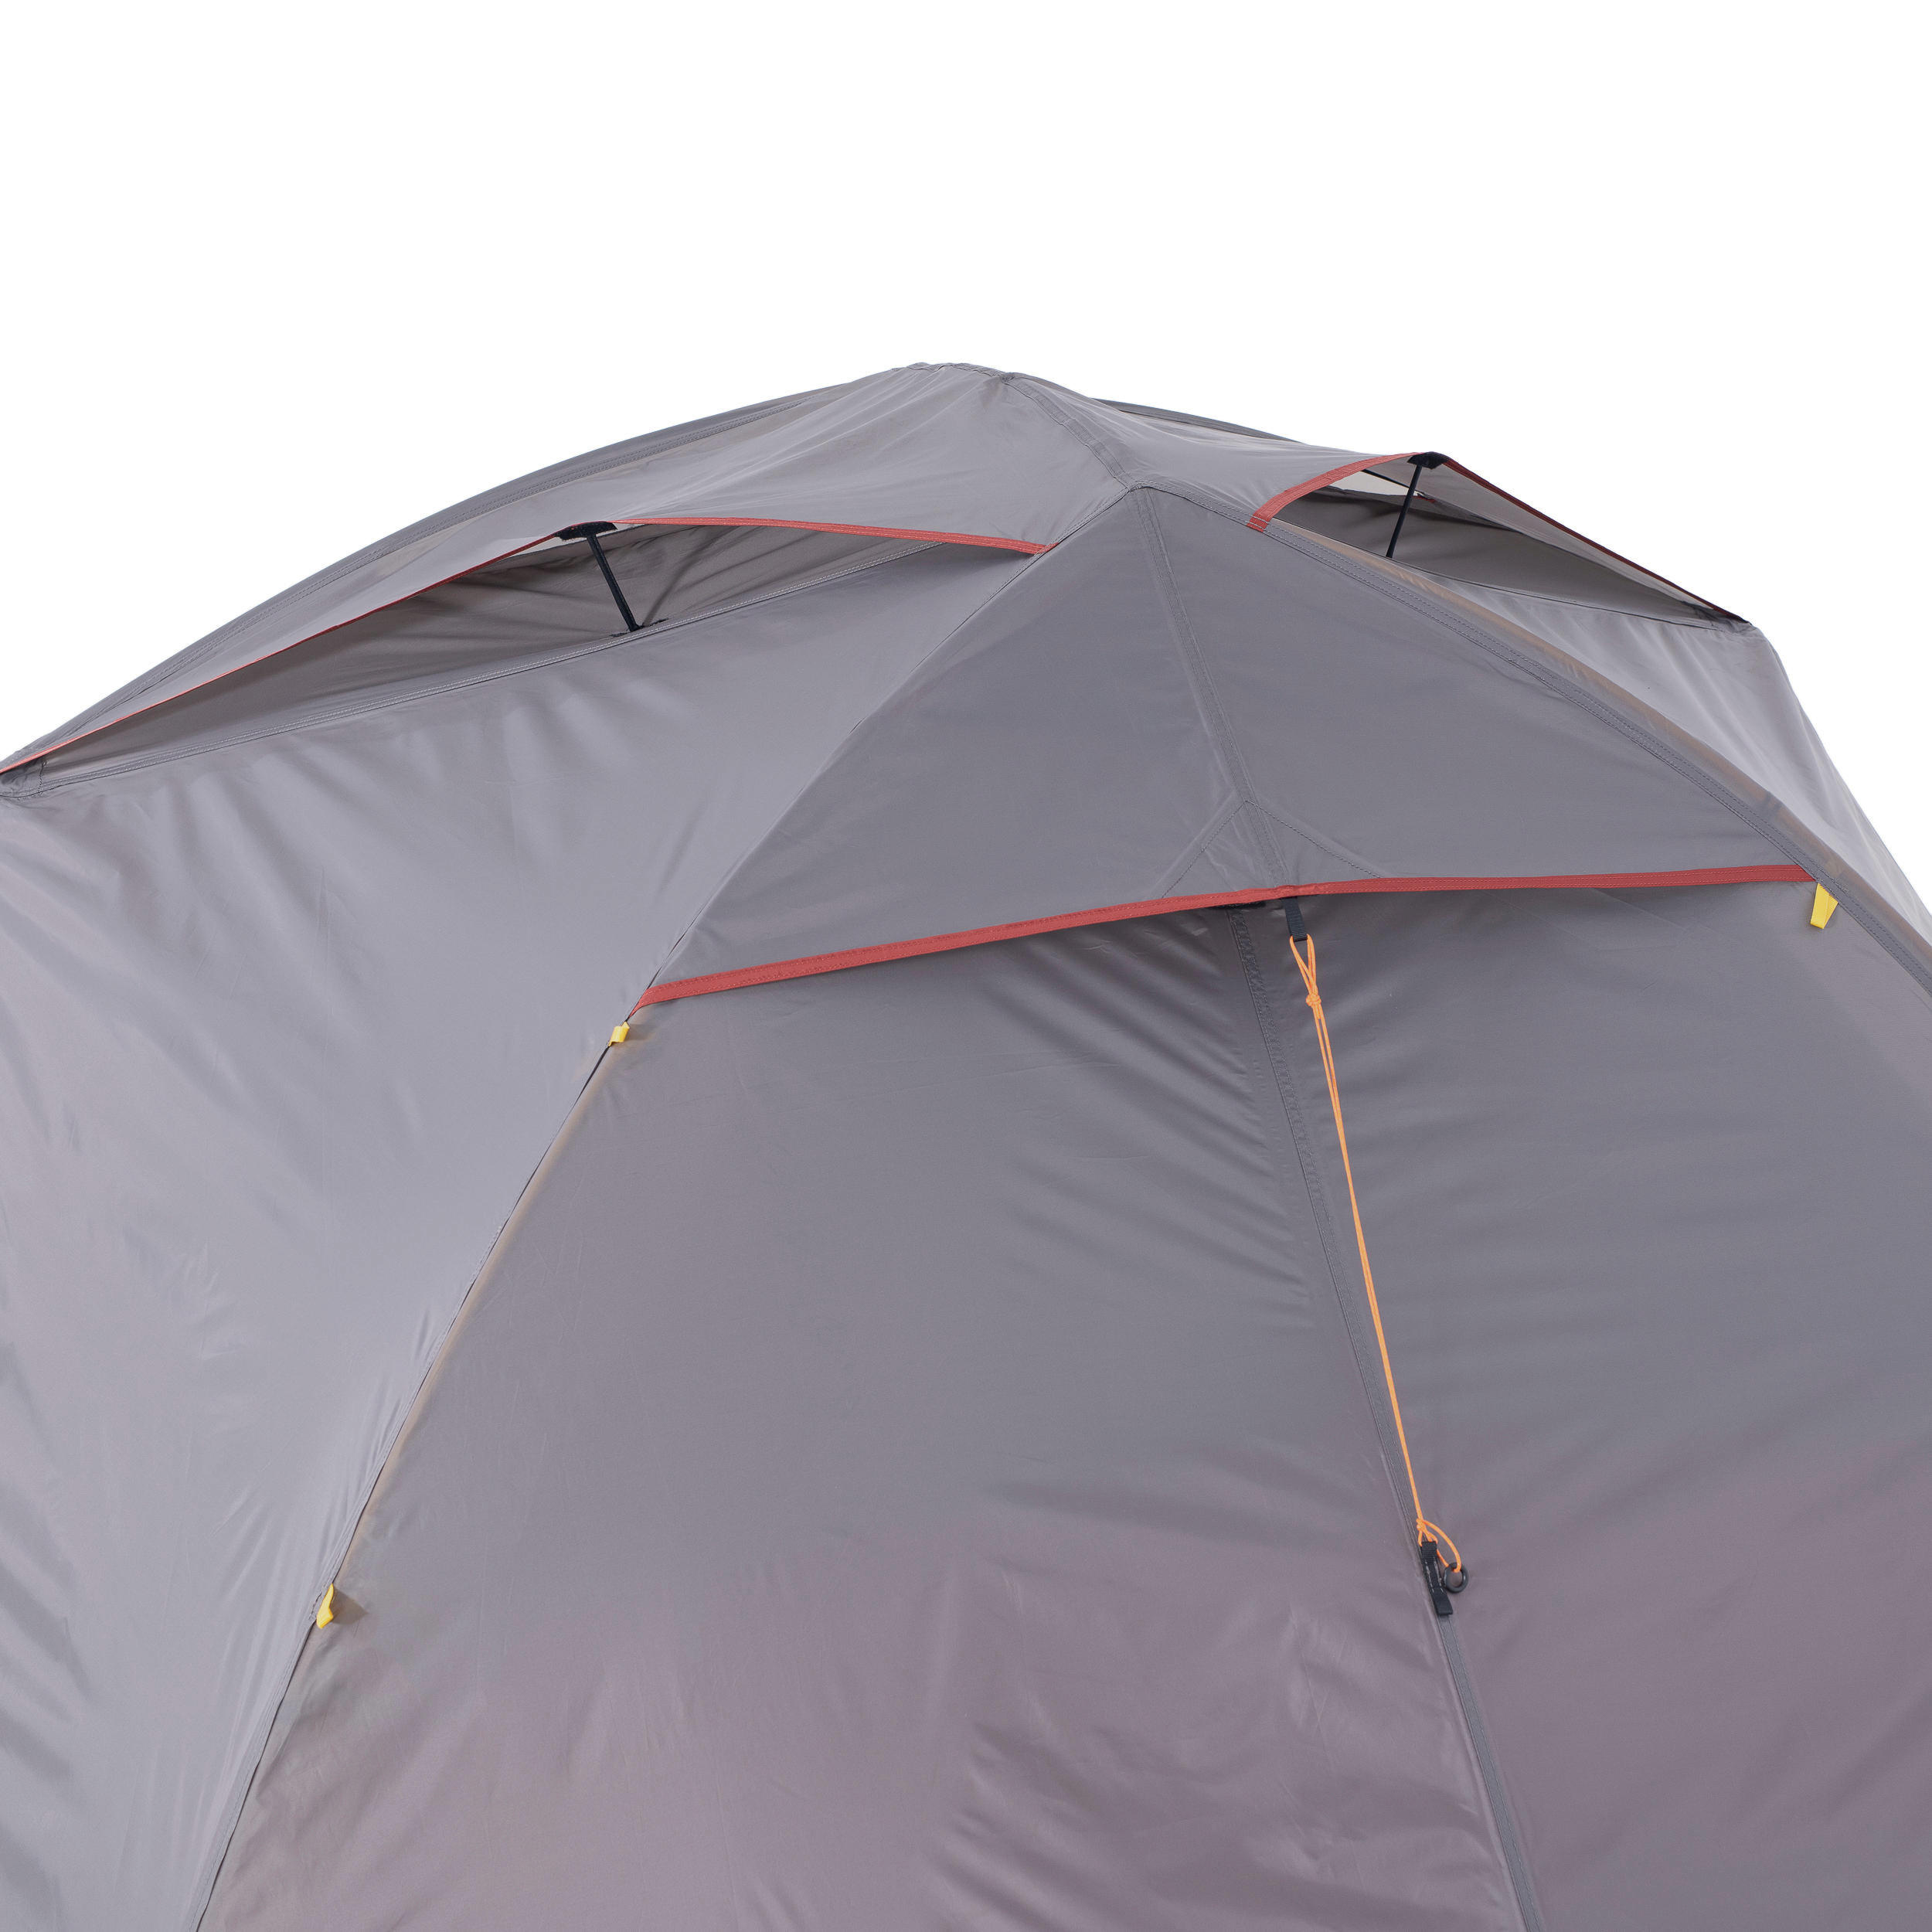 Dome Trekking Tent - 3 person - MT900 11/16